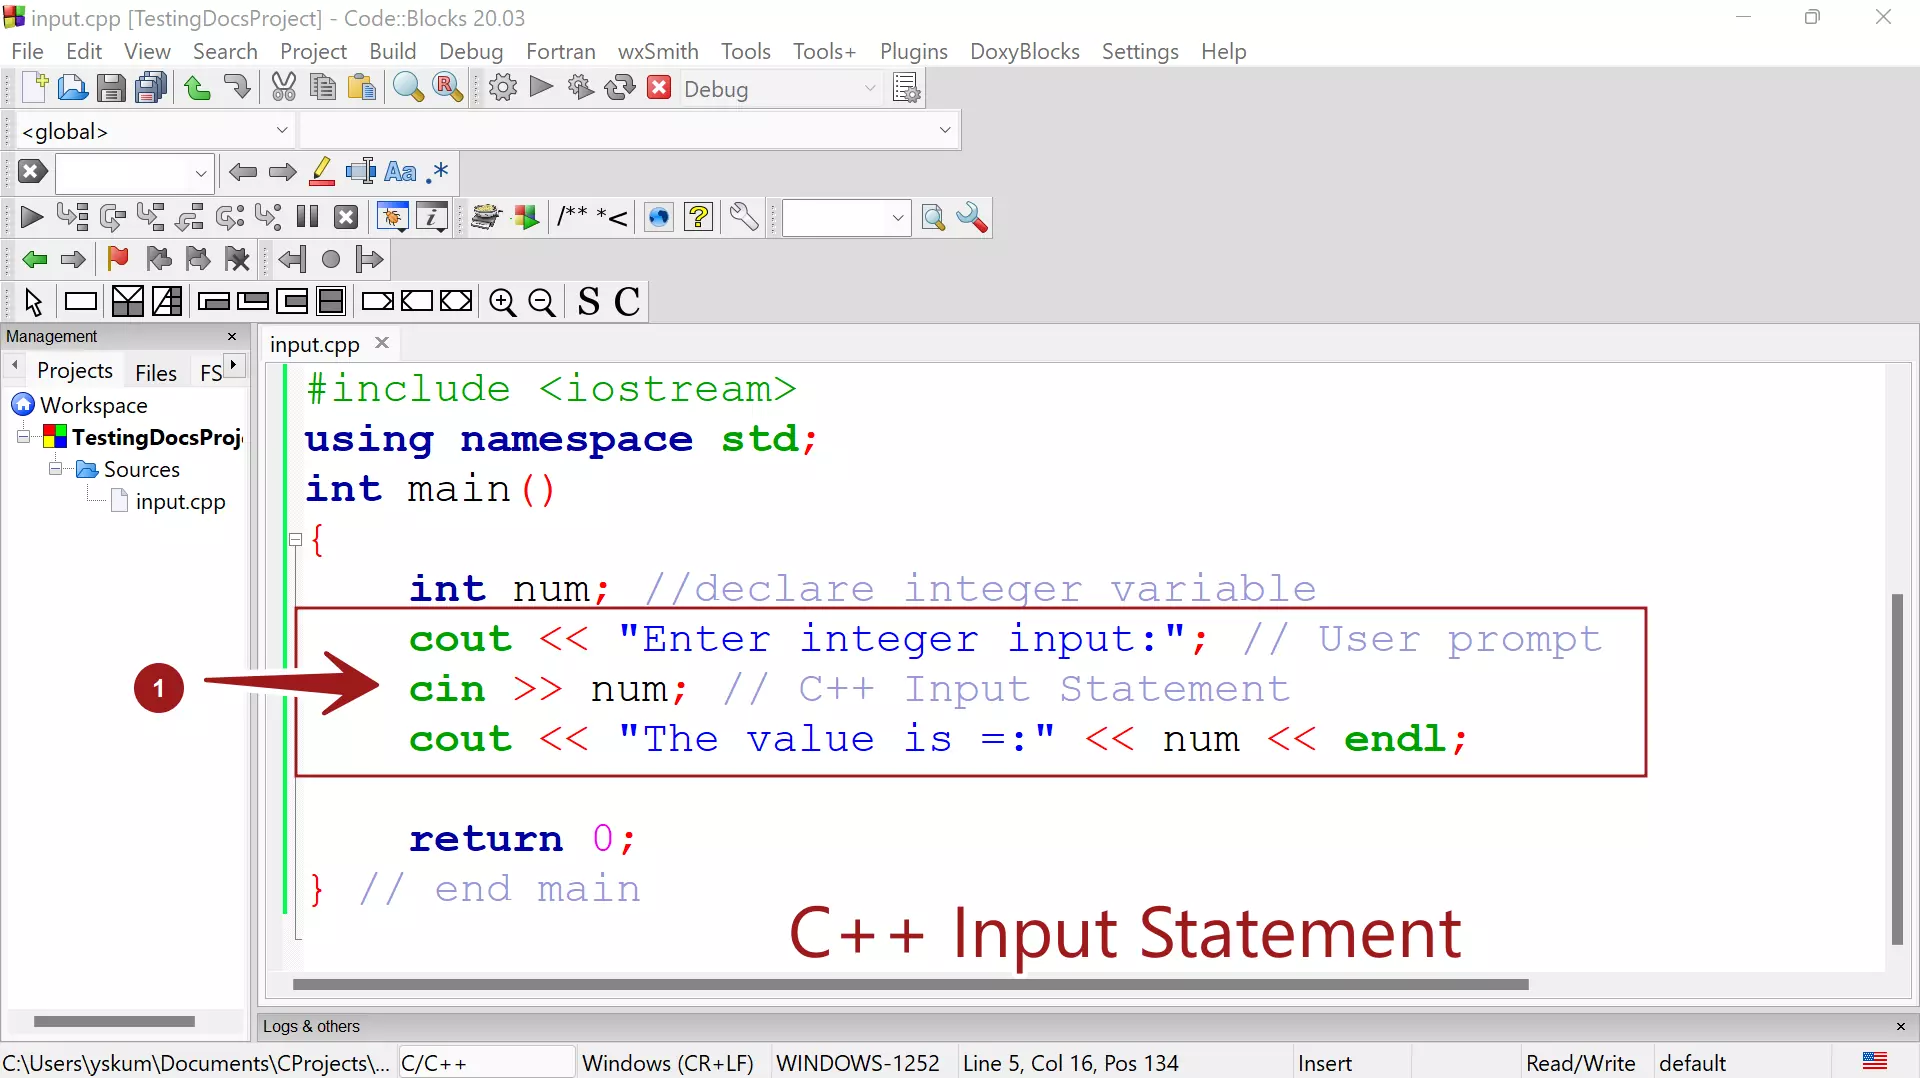 C++ Input Statement